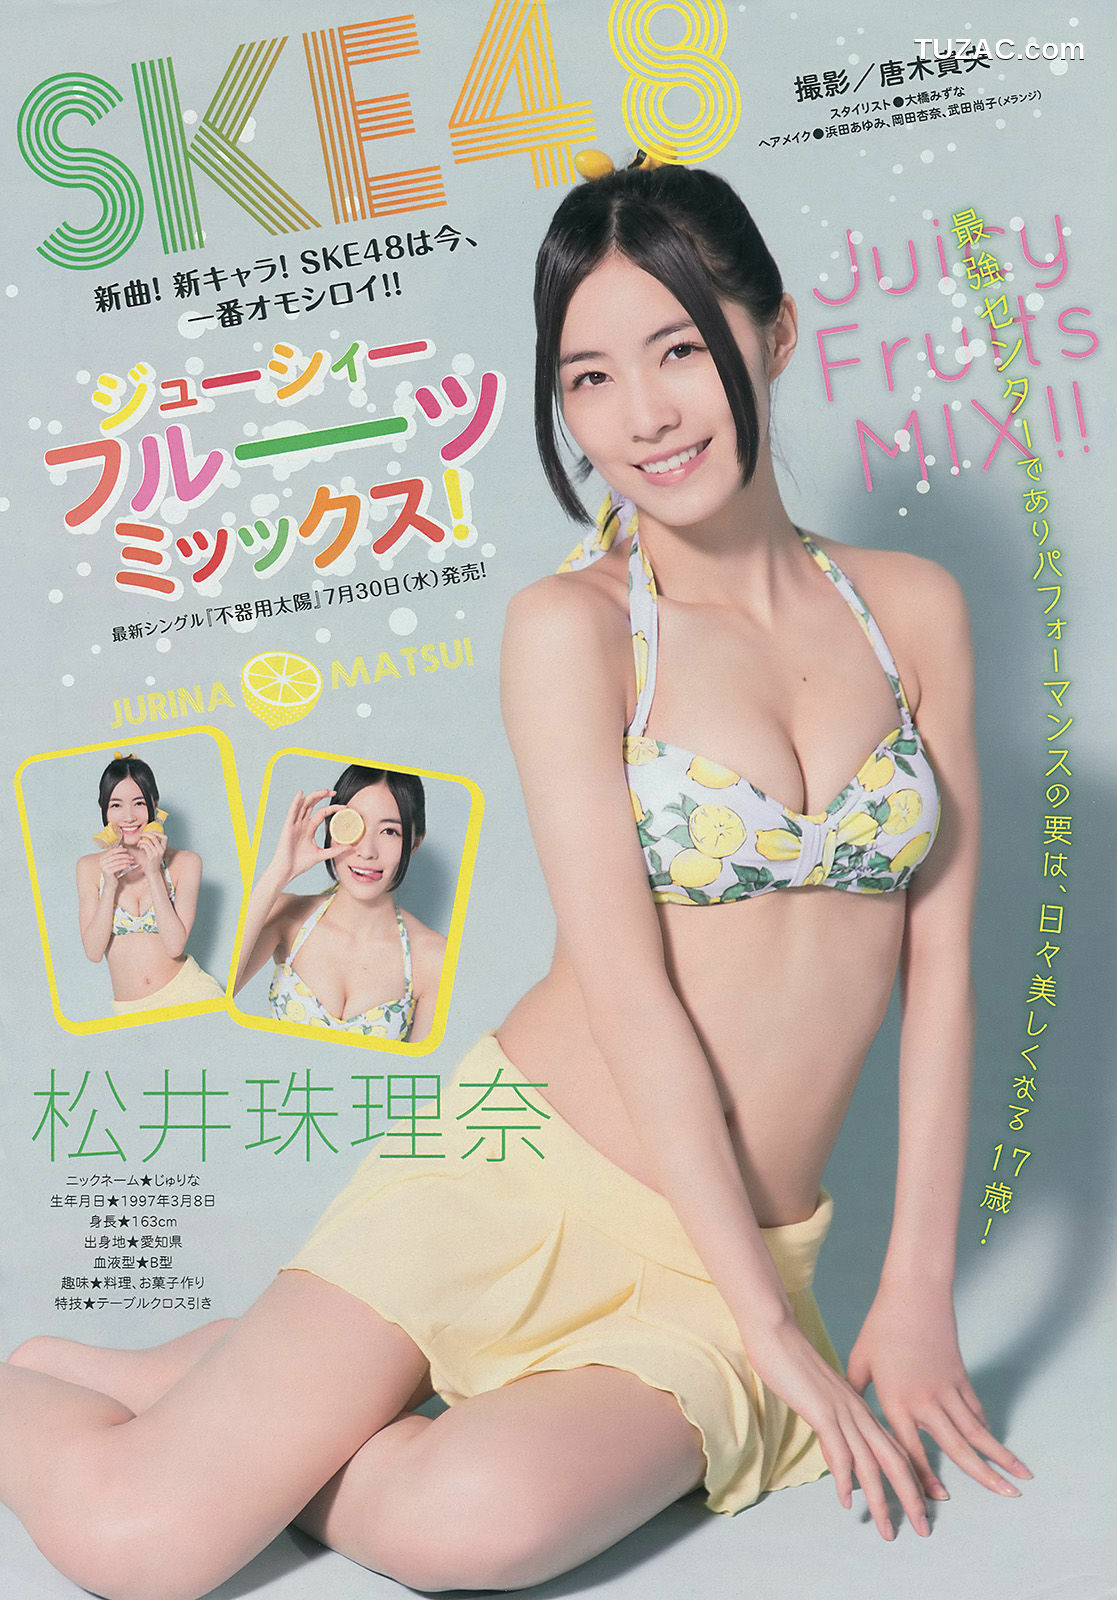 Young Magazine杂志写真_ SKE48 江田結香 2014年No.35 写真杂志[14P]